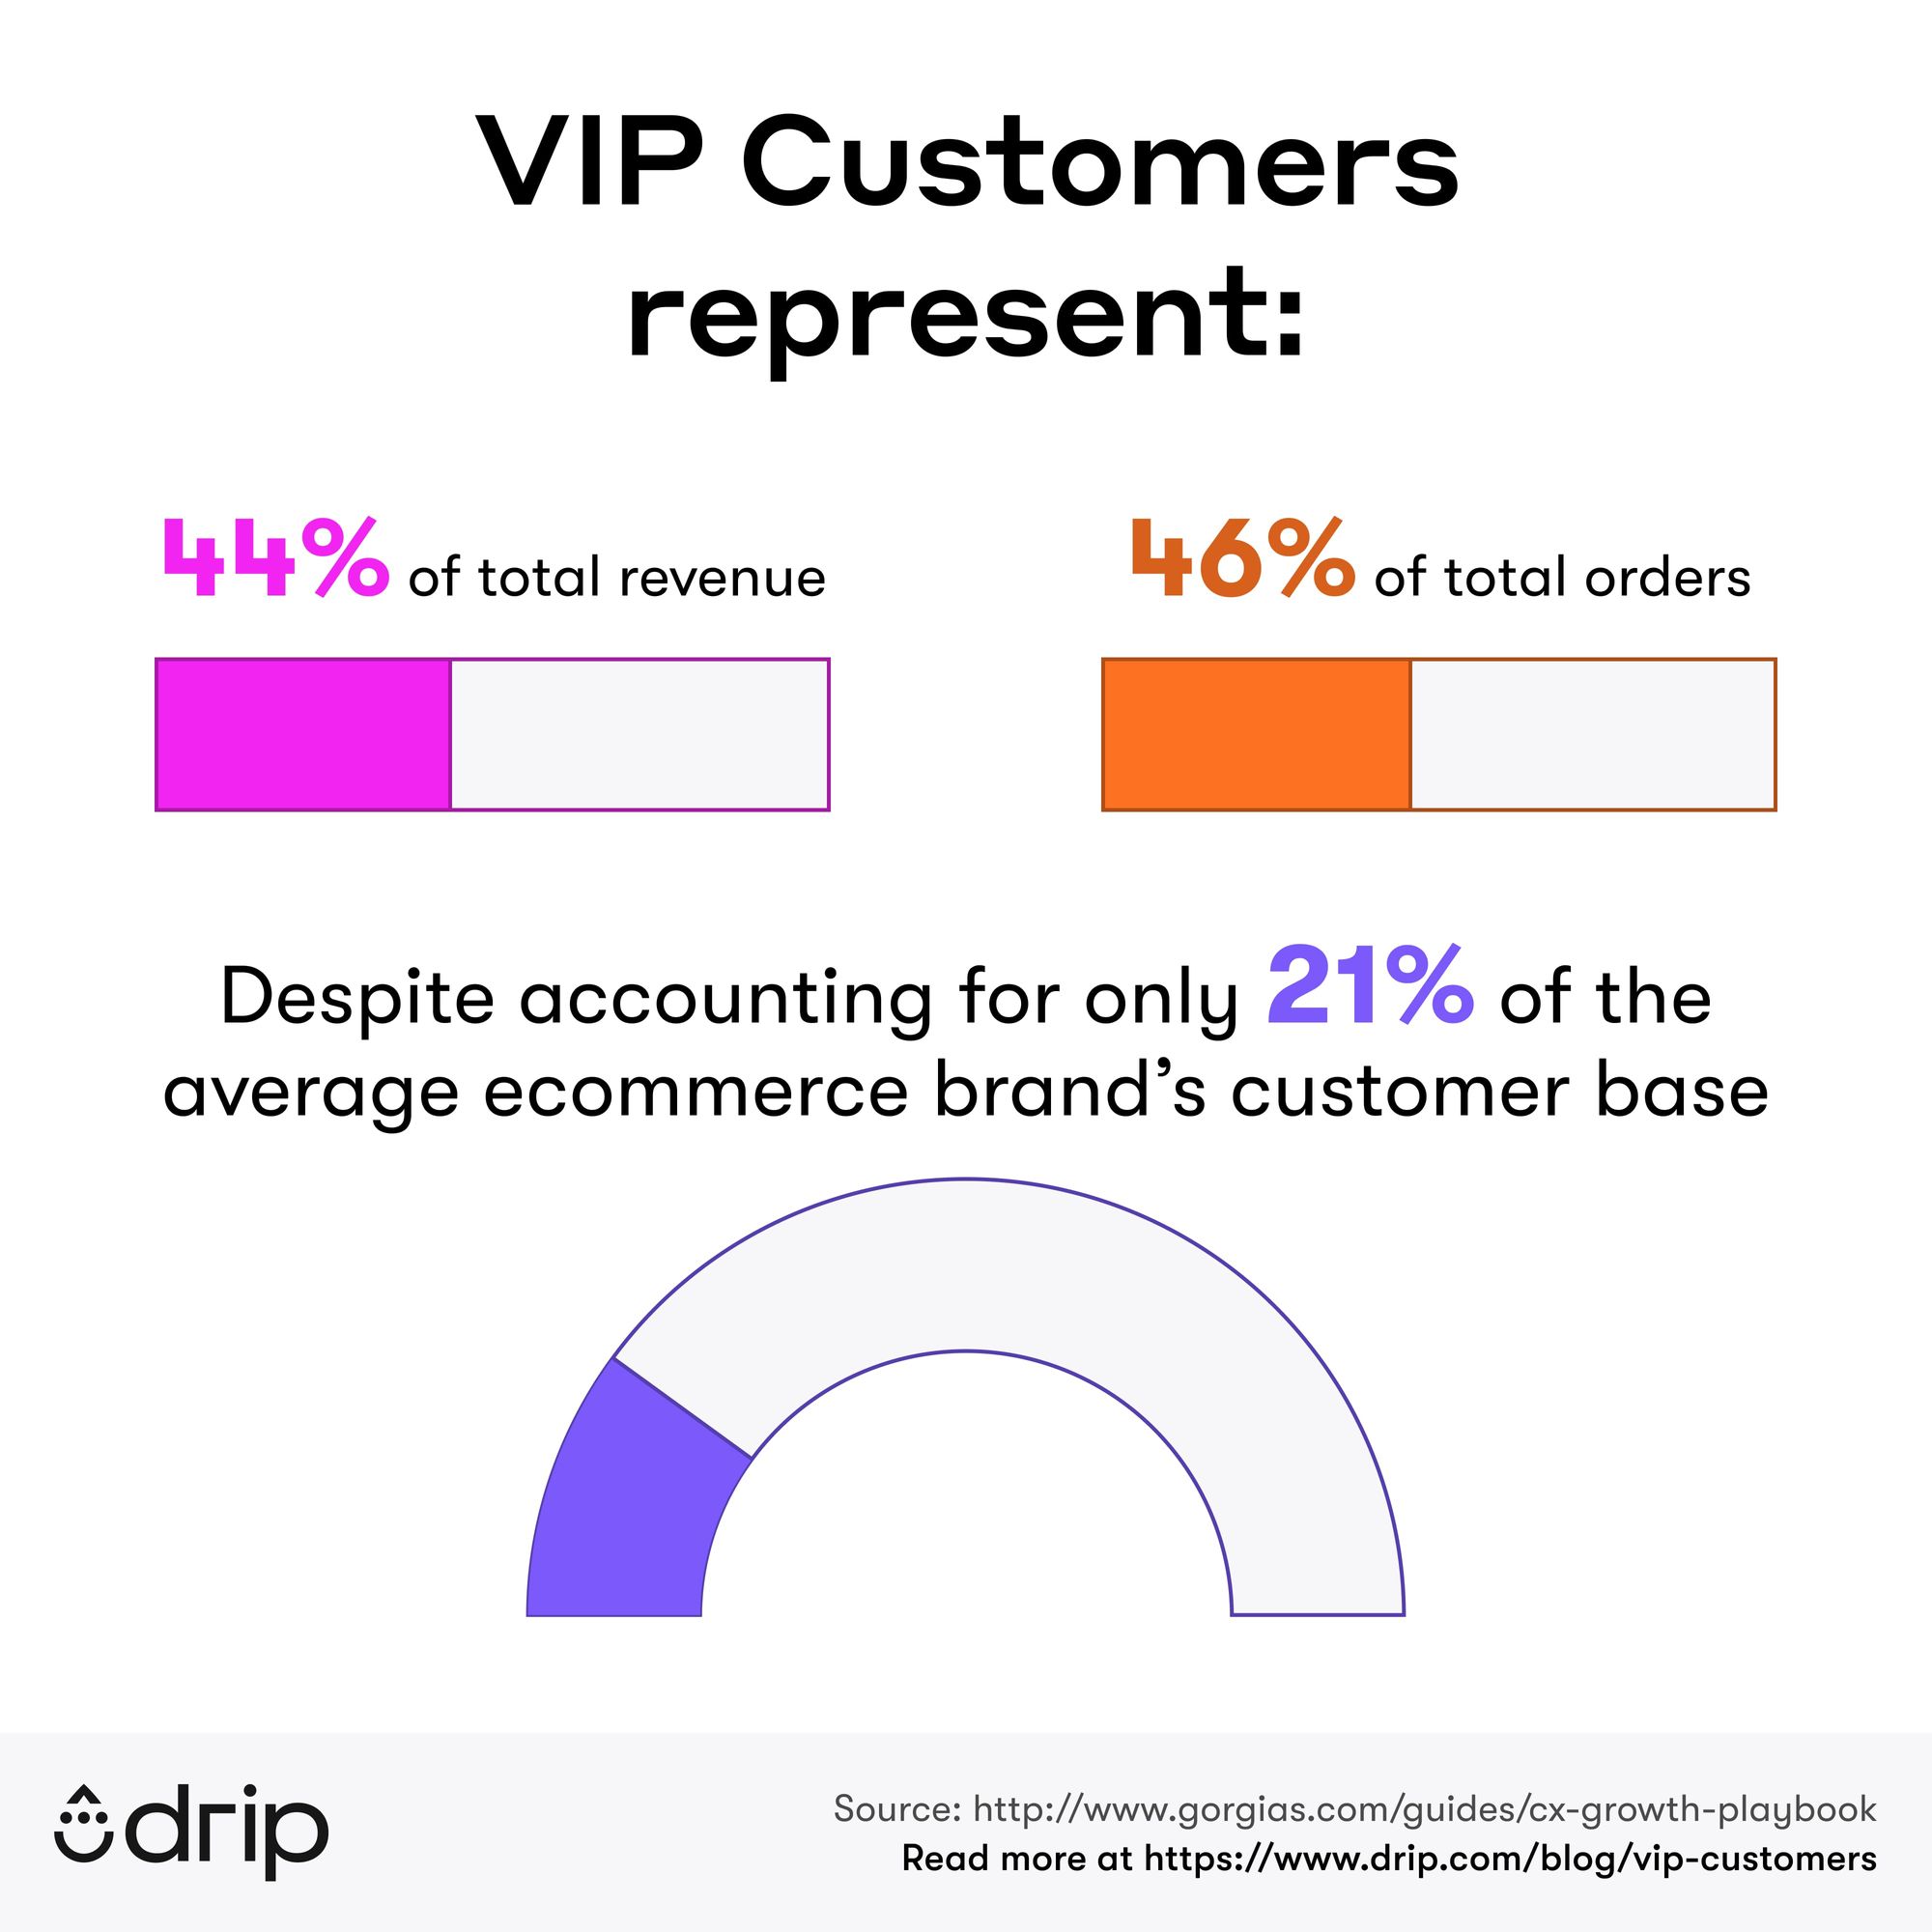 vip_customers_represent